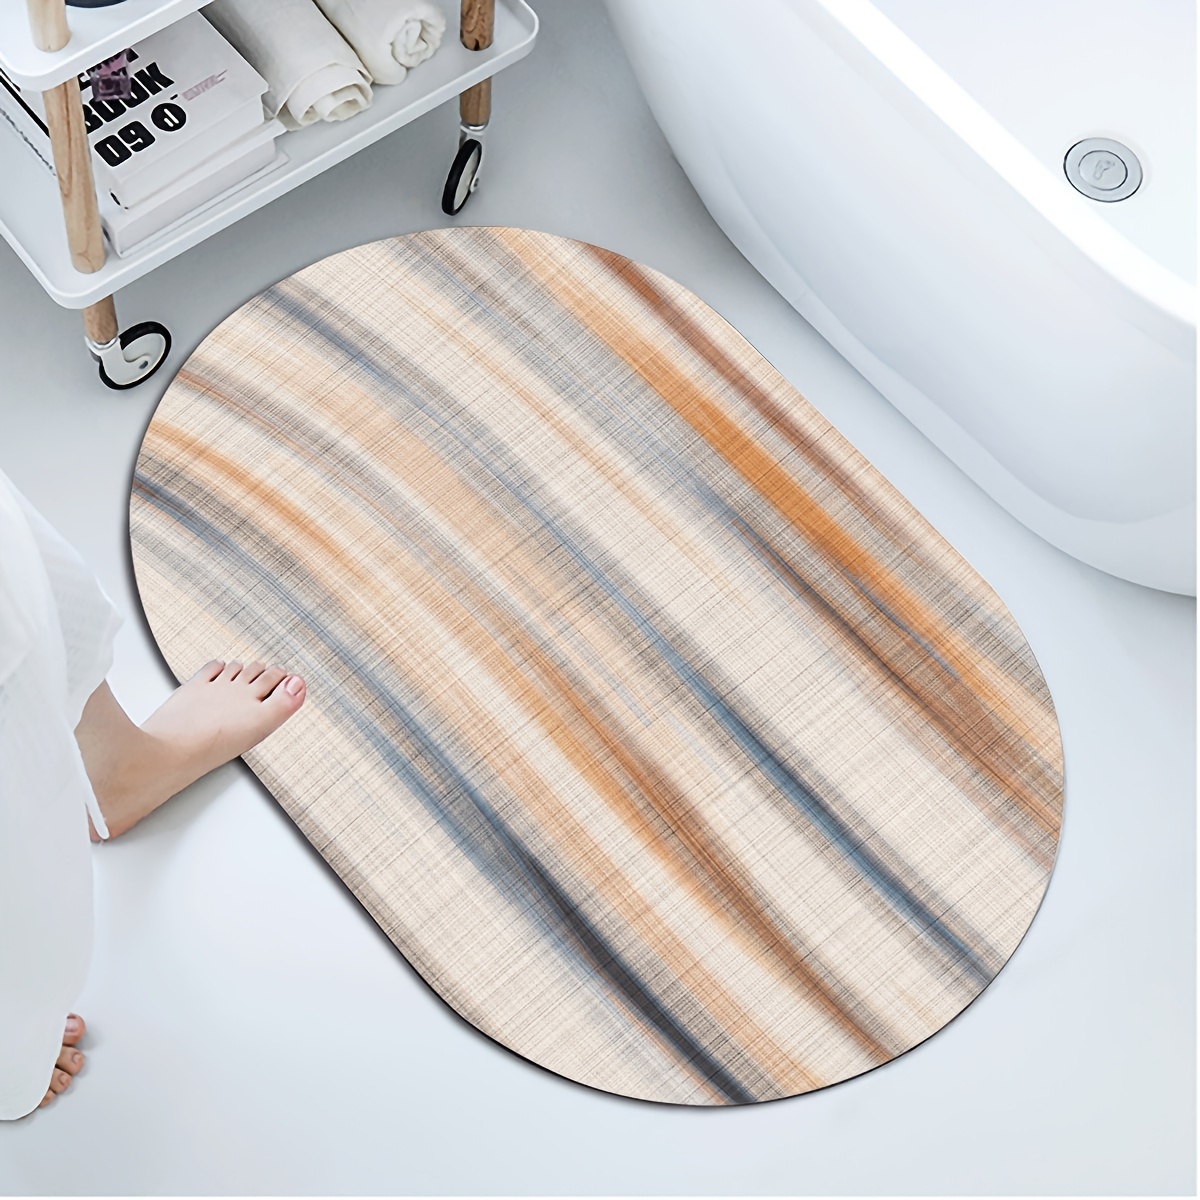 Bath Mat-Bathroom Mat Rug Non Slip Super Absorbent Stain Resistant